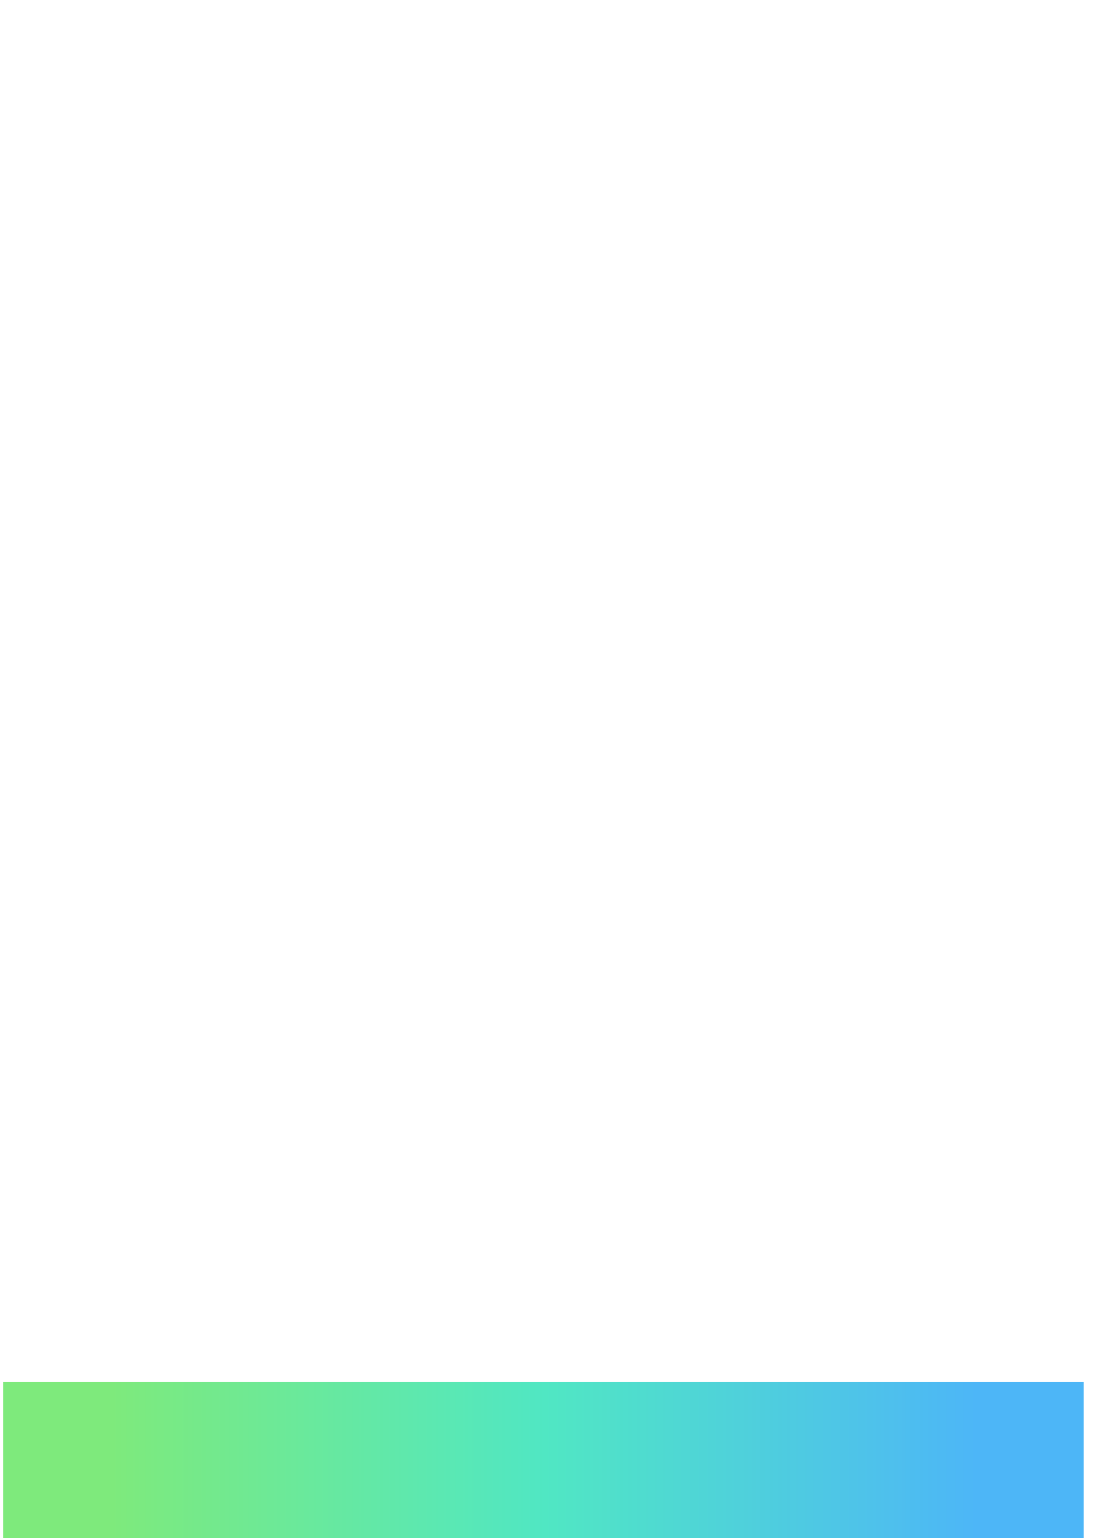 Aker Horizons logo for dark backgrounds (transparent PNG)